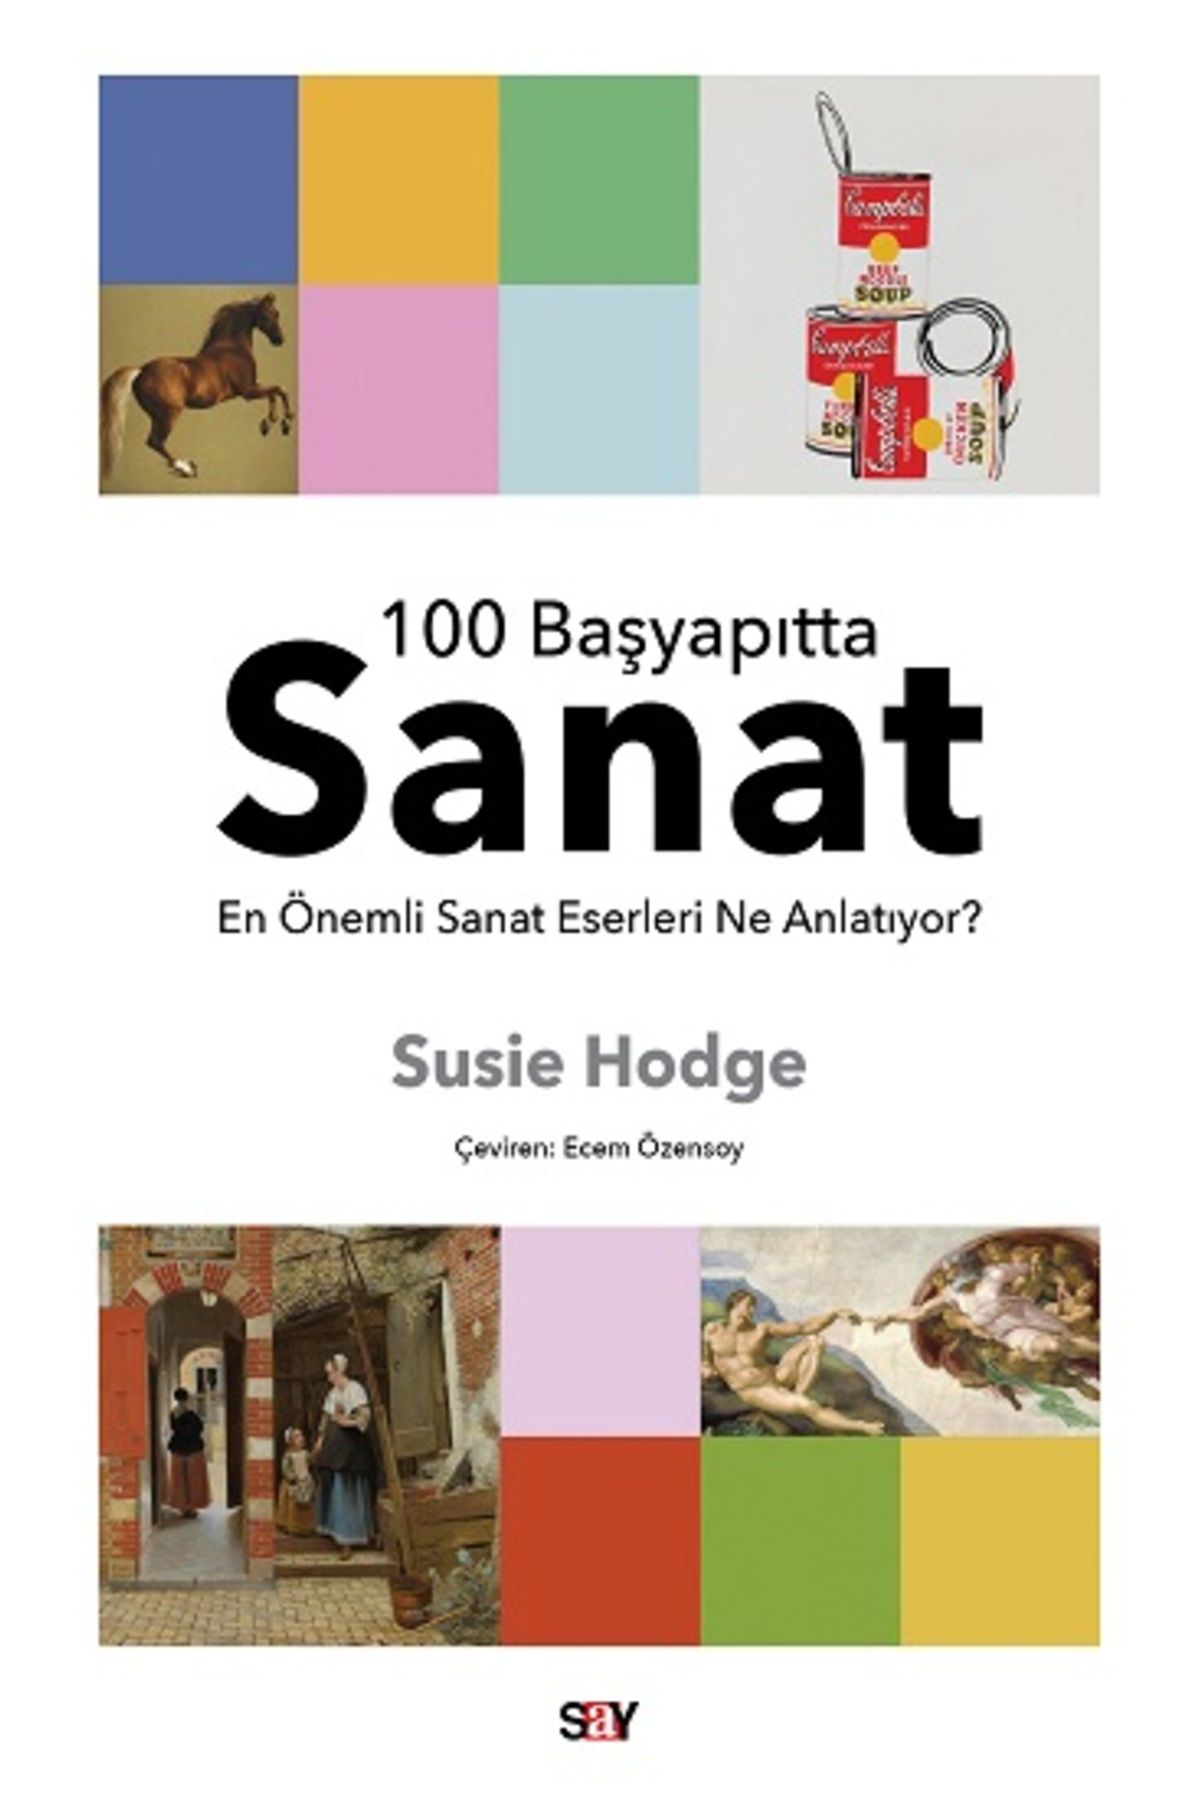 Say Yayınları 100 Başyapıtta Sanat kitabı - Susie Hodge - Say Yayınları